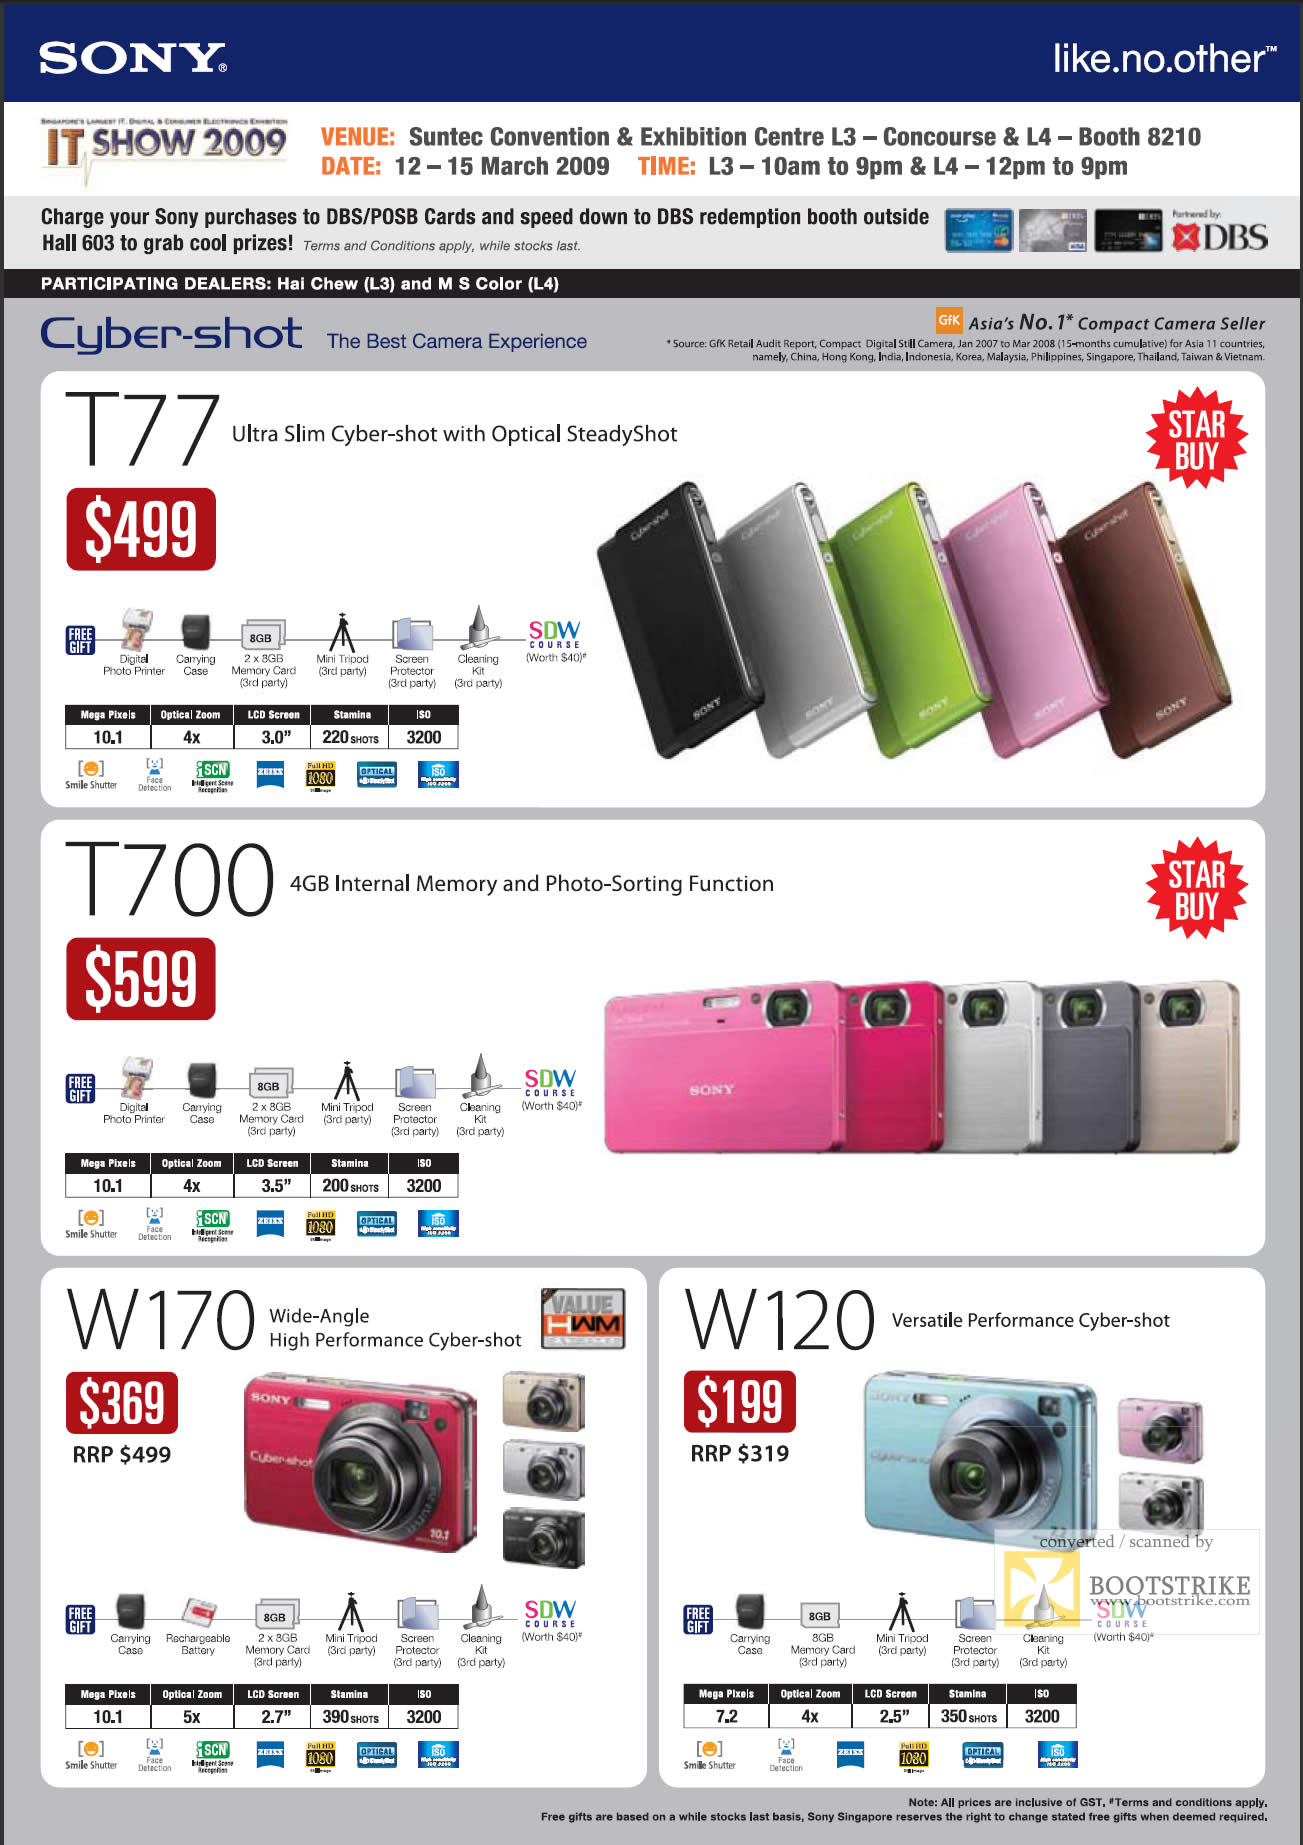 IT Show 2009 price list image brochure of Sony Cyber-shot T W Series